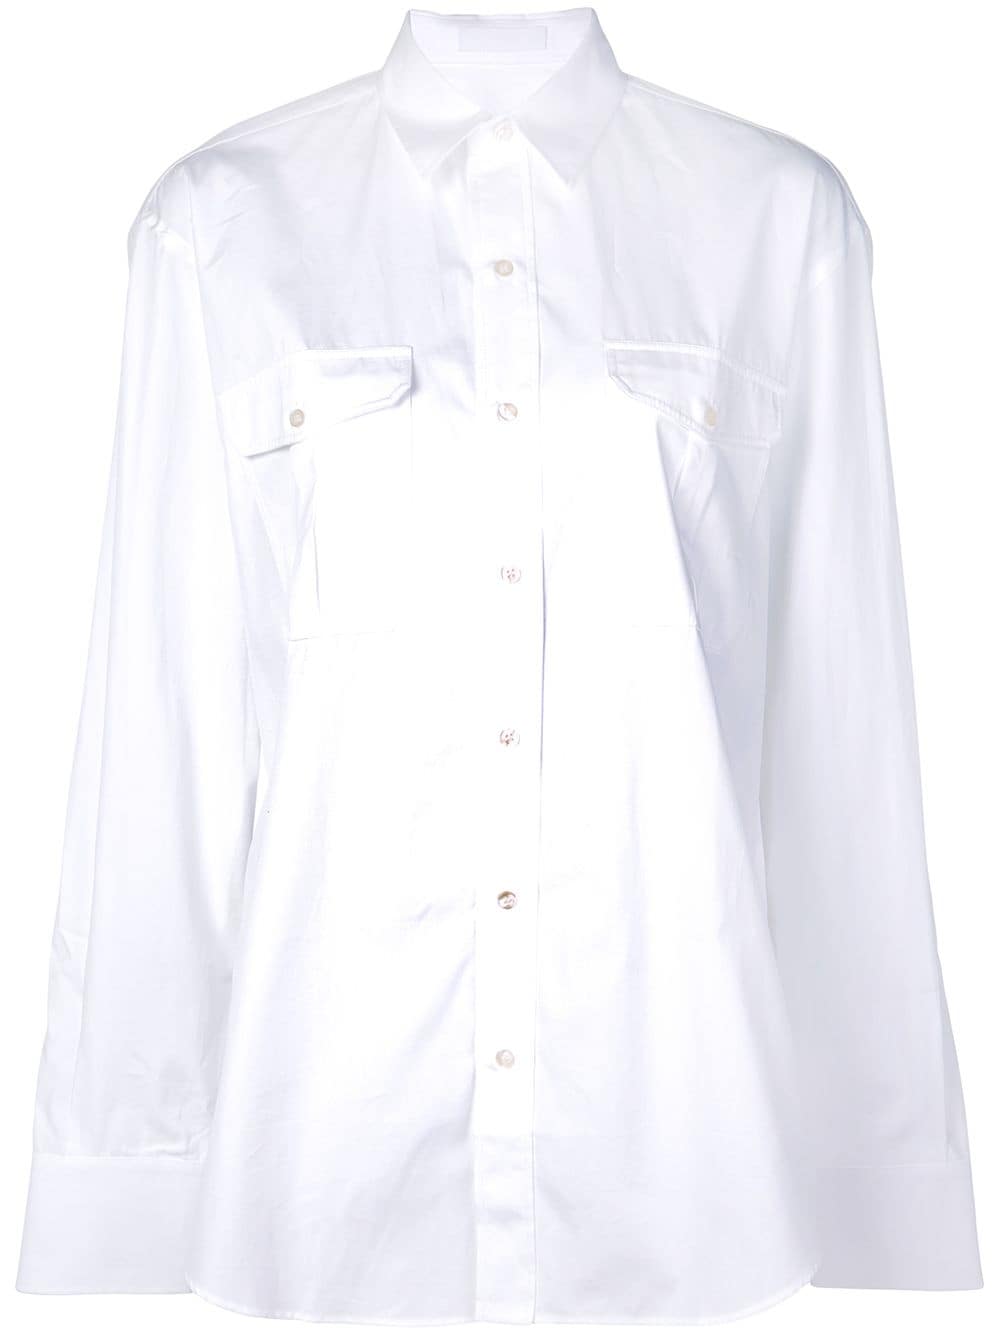 WARDROBE.NYC Release 03 Tailored Poplin Shirt - Farfetch